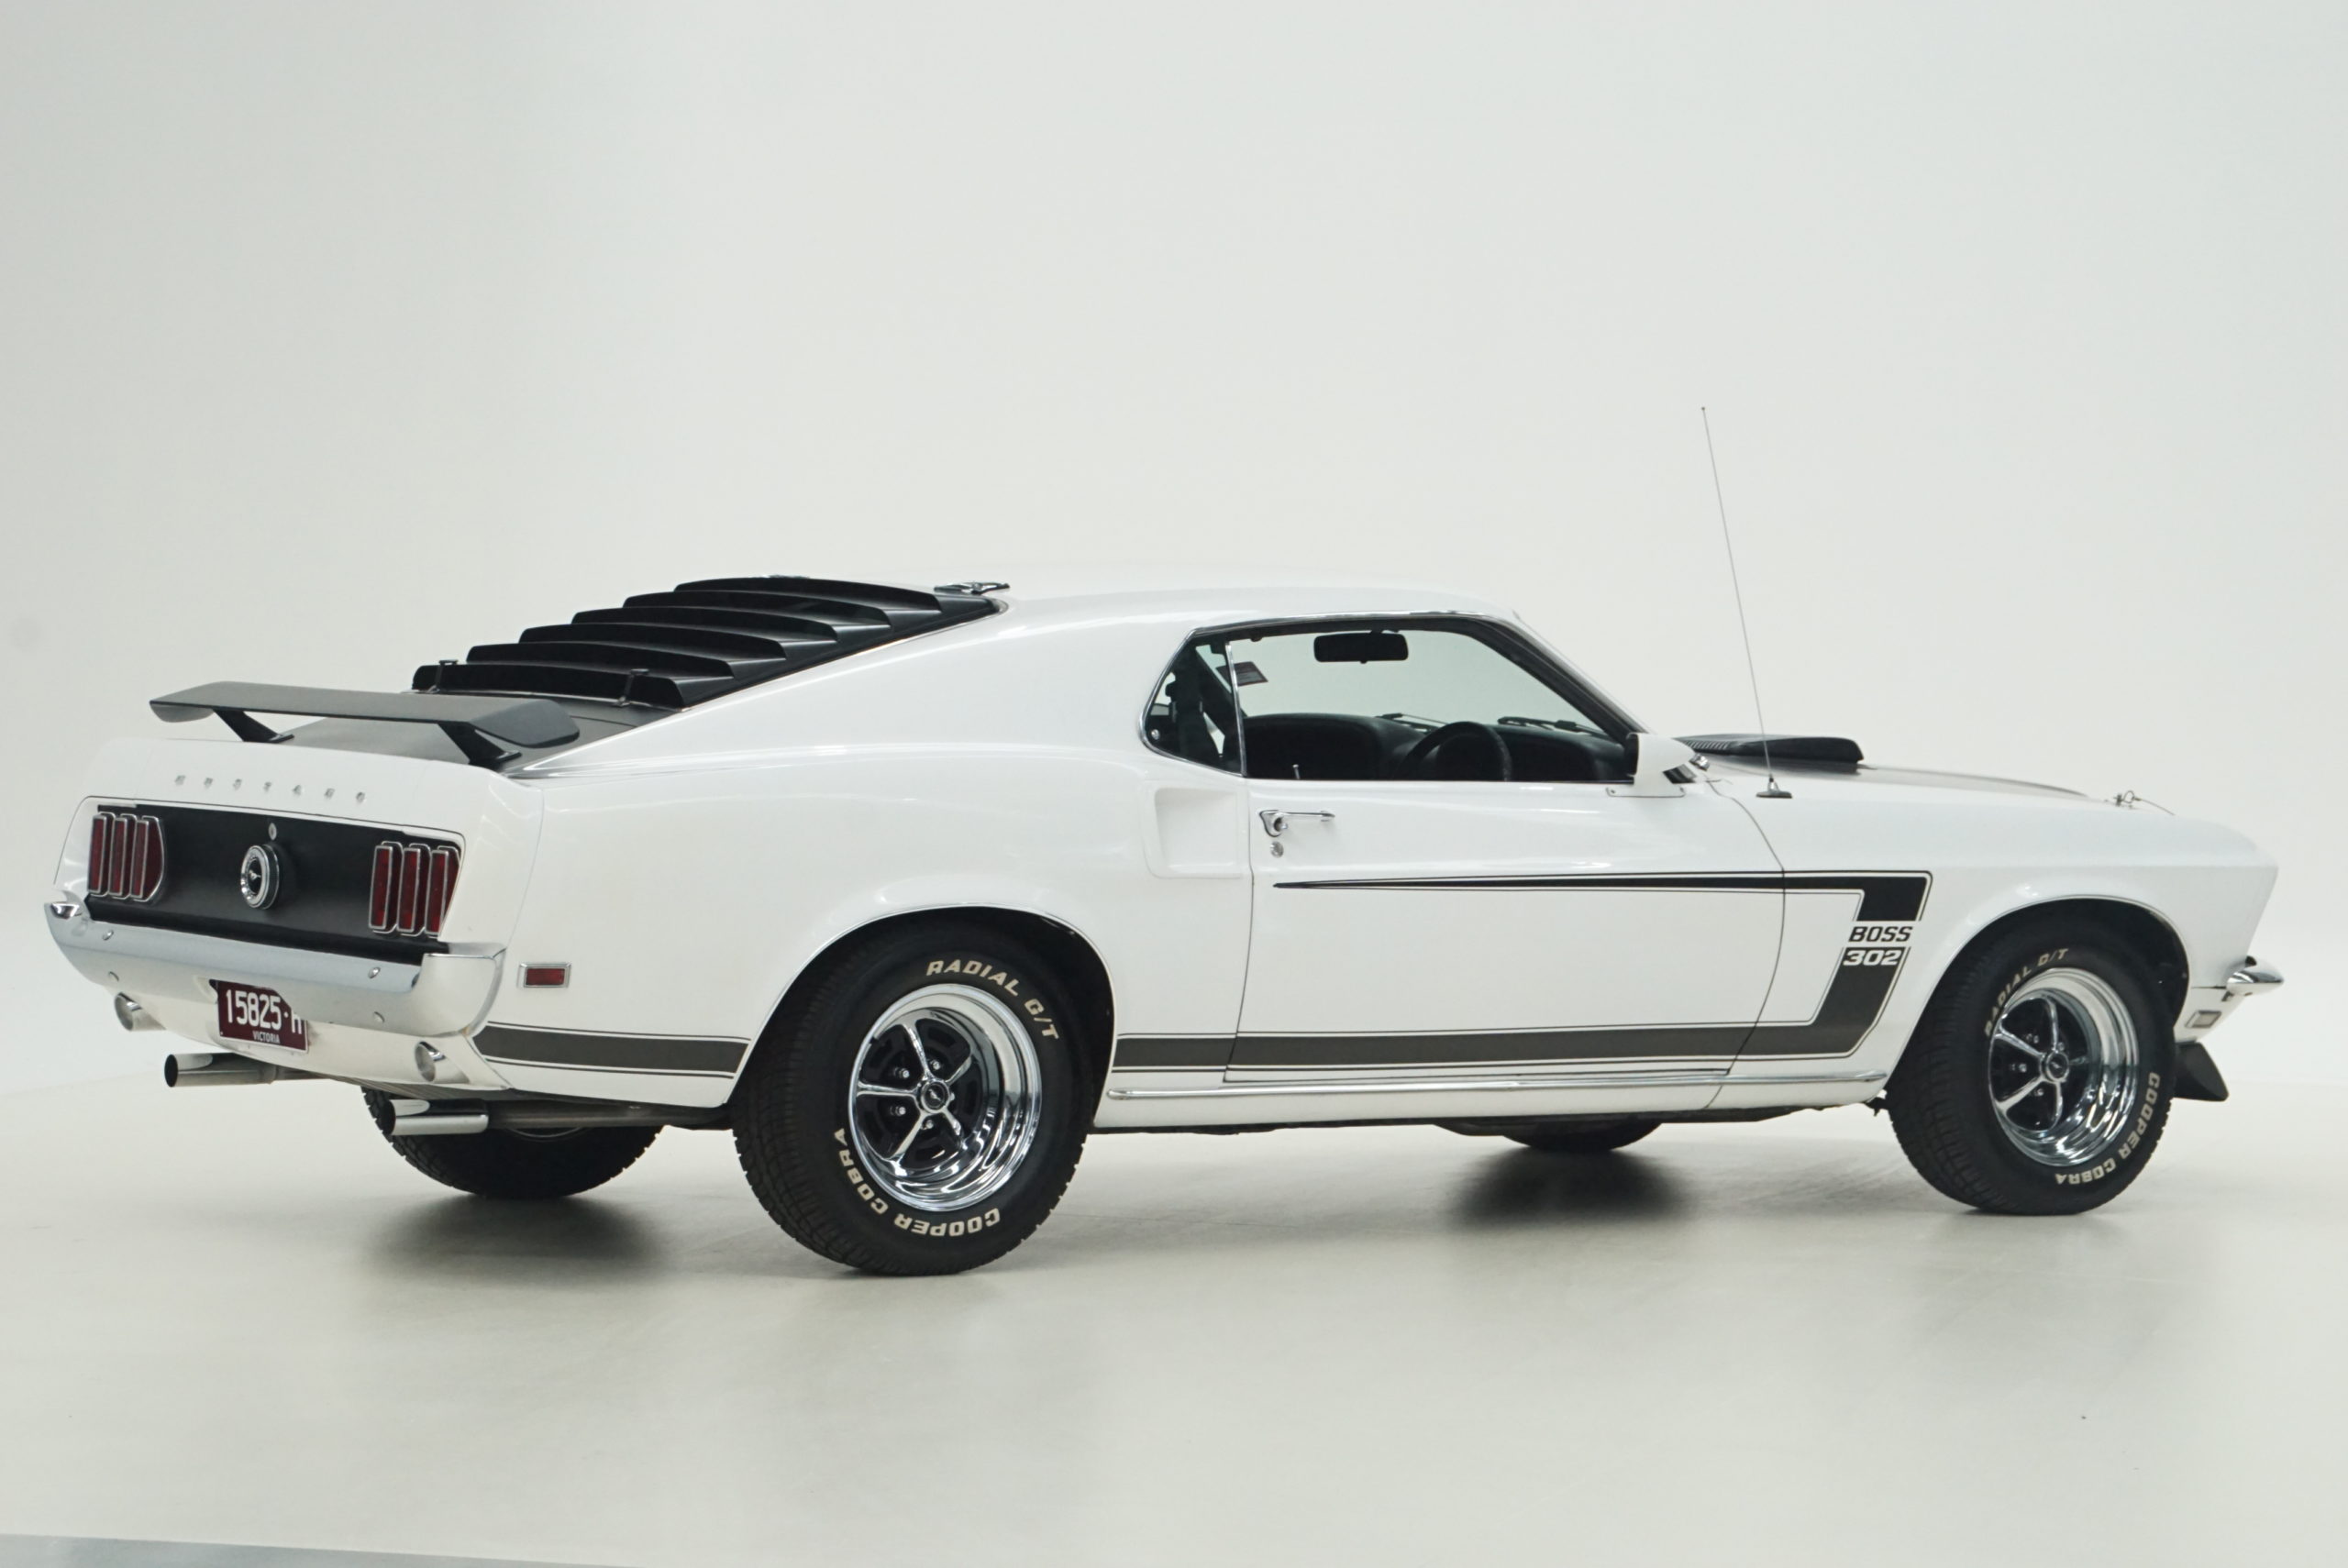 1969 Ford Mustang Boss 302 Tribute Fastback latéral trois quarts arrière droit - Shannons Auctions avril 2021.